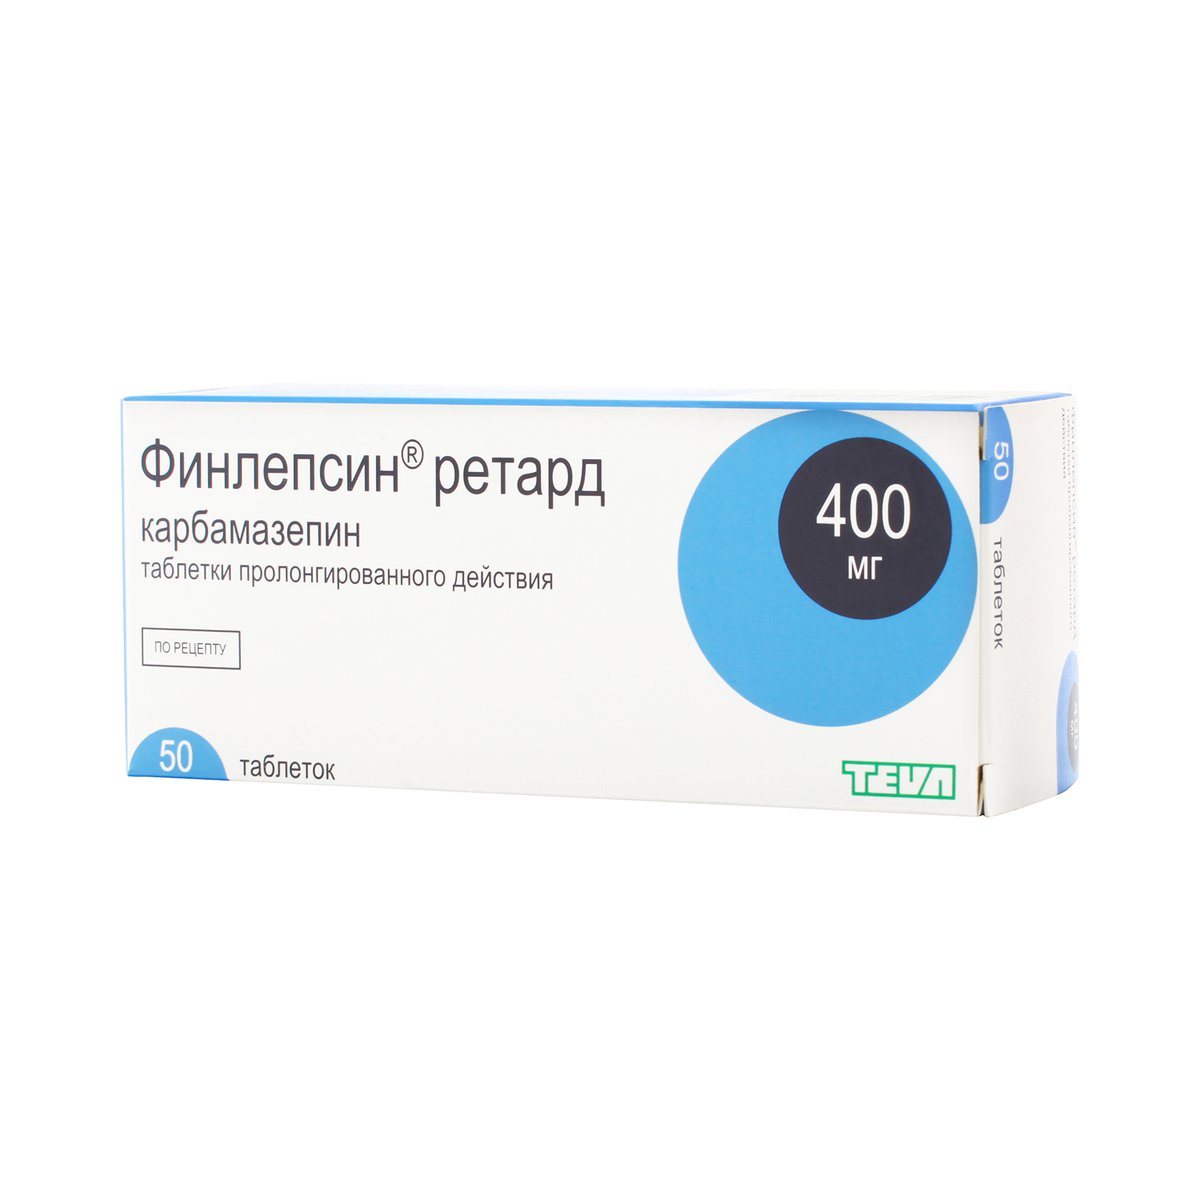 Финлепсин ретард (таблетки, 50 шт, 400 мг, для приема внутрь) - цена .